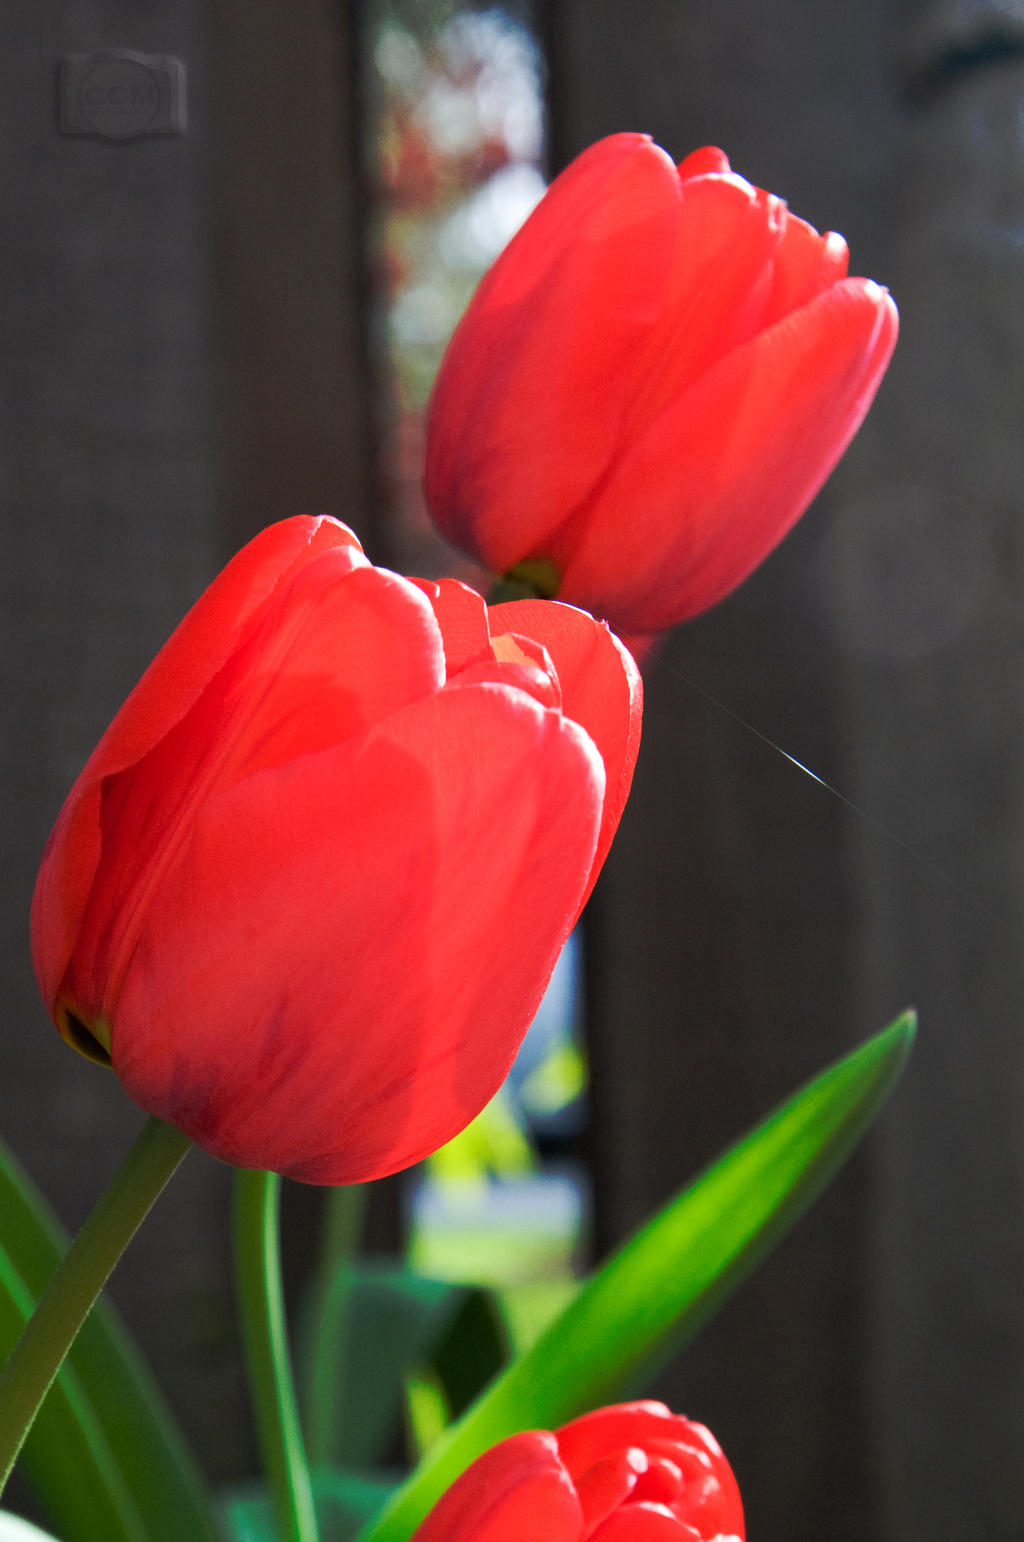 Tulip v. Lily Put